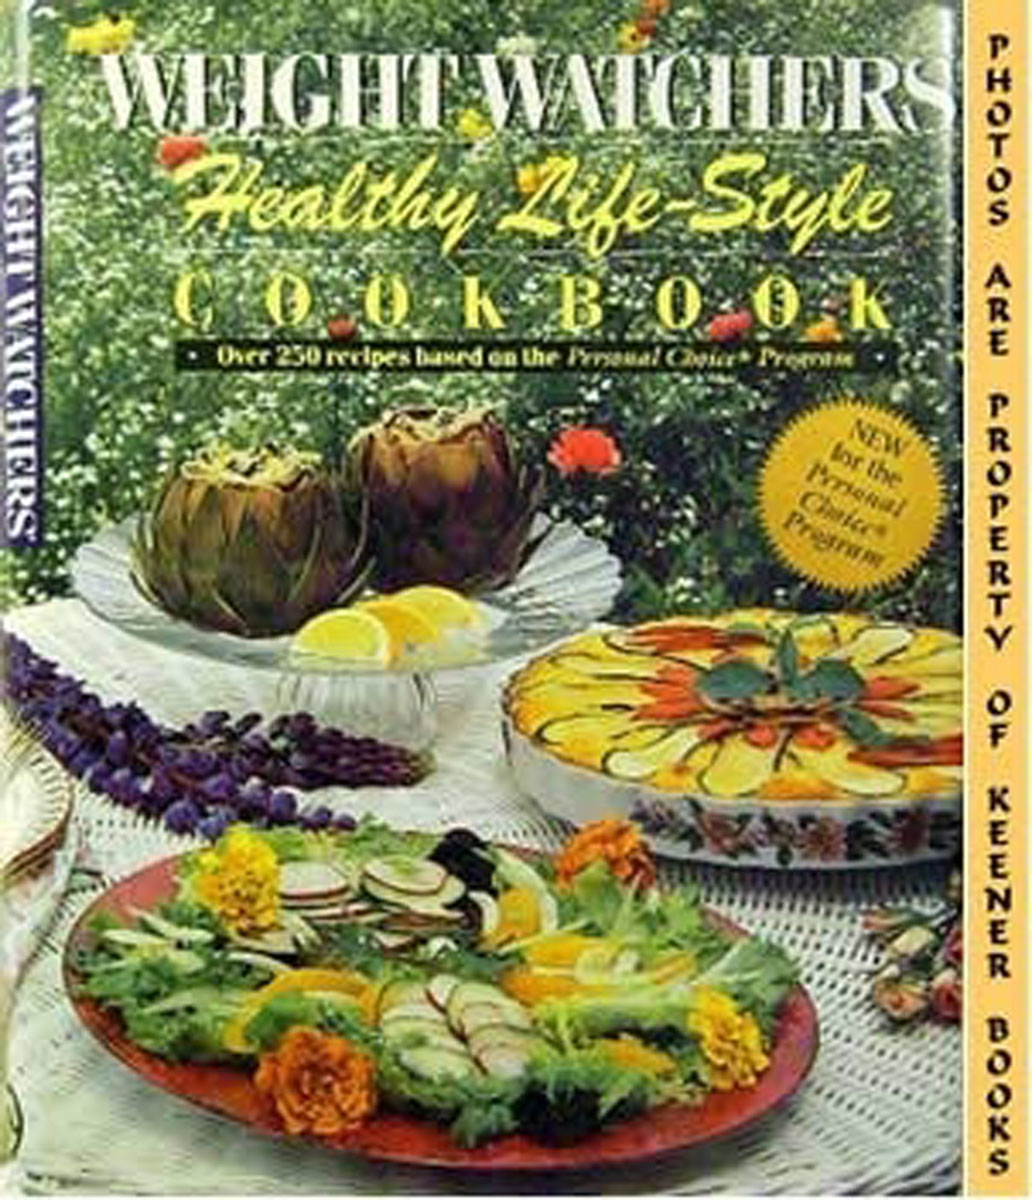 WEIGHT WATCHERS EDITORS - Weight Watchers Healthy Life-Style Cookbook